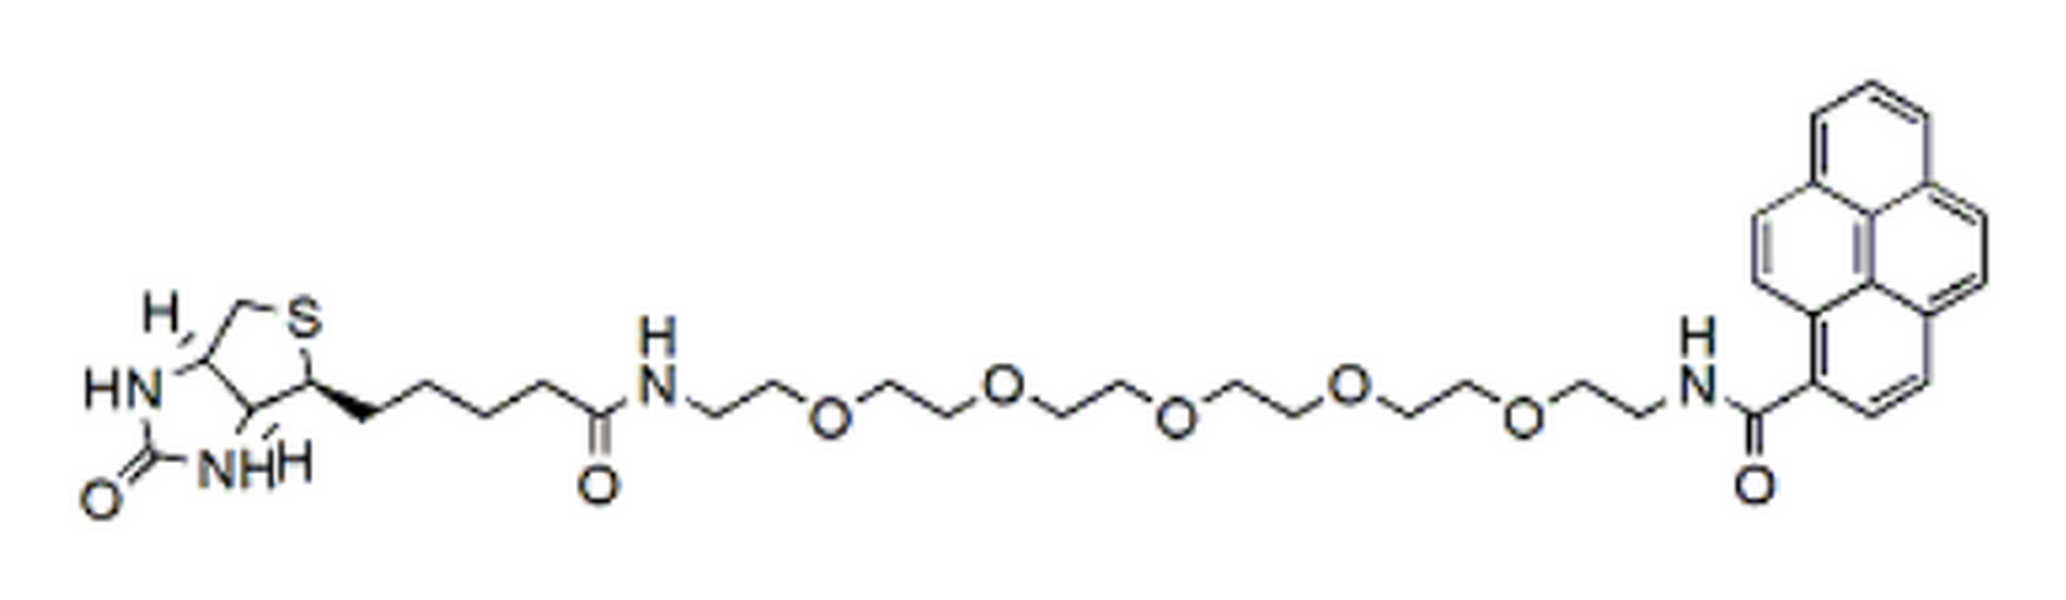 Pyrene-PEG5-biotin